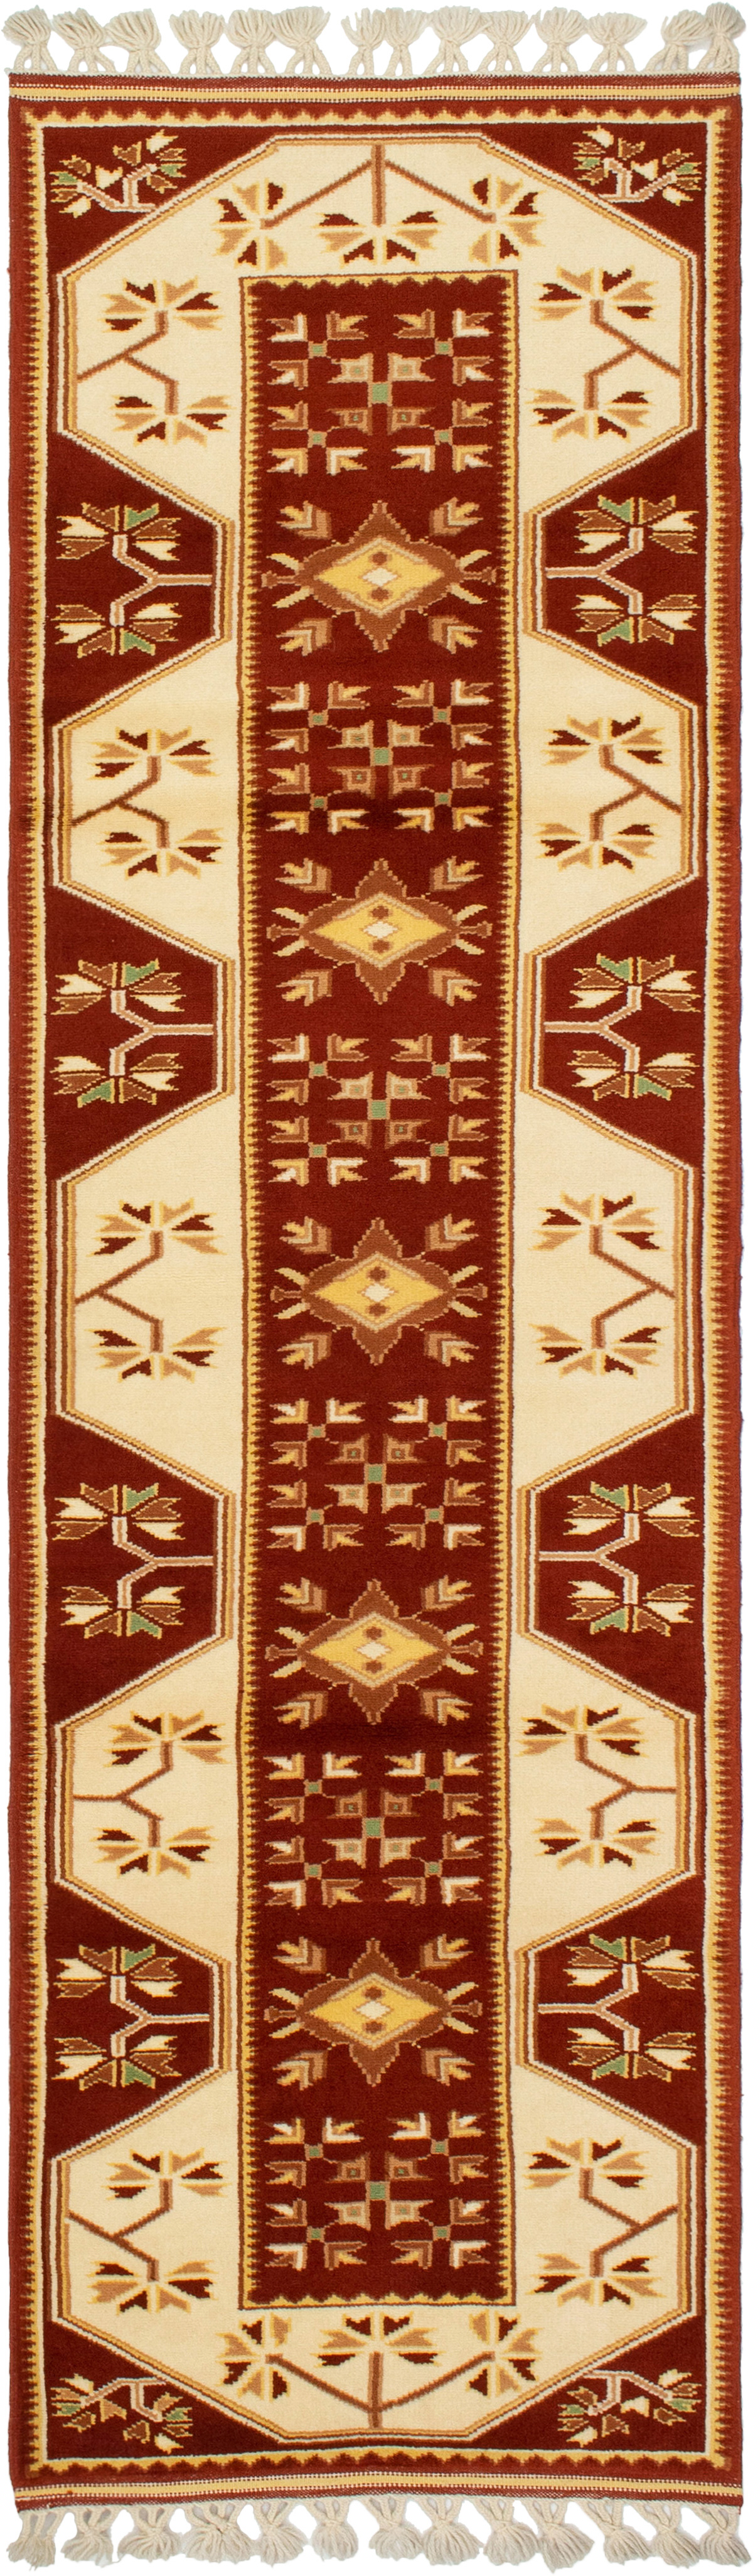 Hand-knotted Ushak Cream, Dark Copper Wool Rug 2'6" x 8'7" Size: 2'6" x 8'7"  